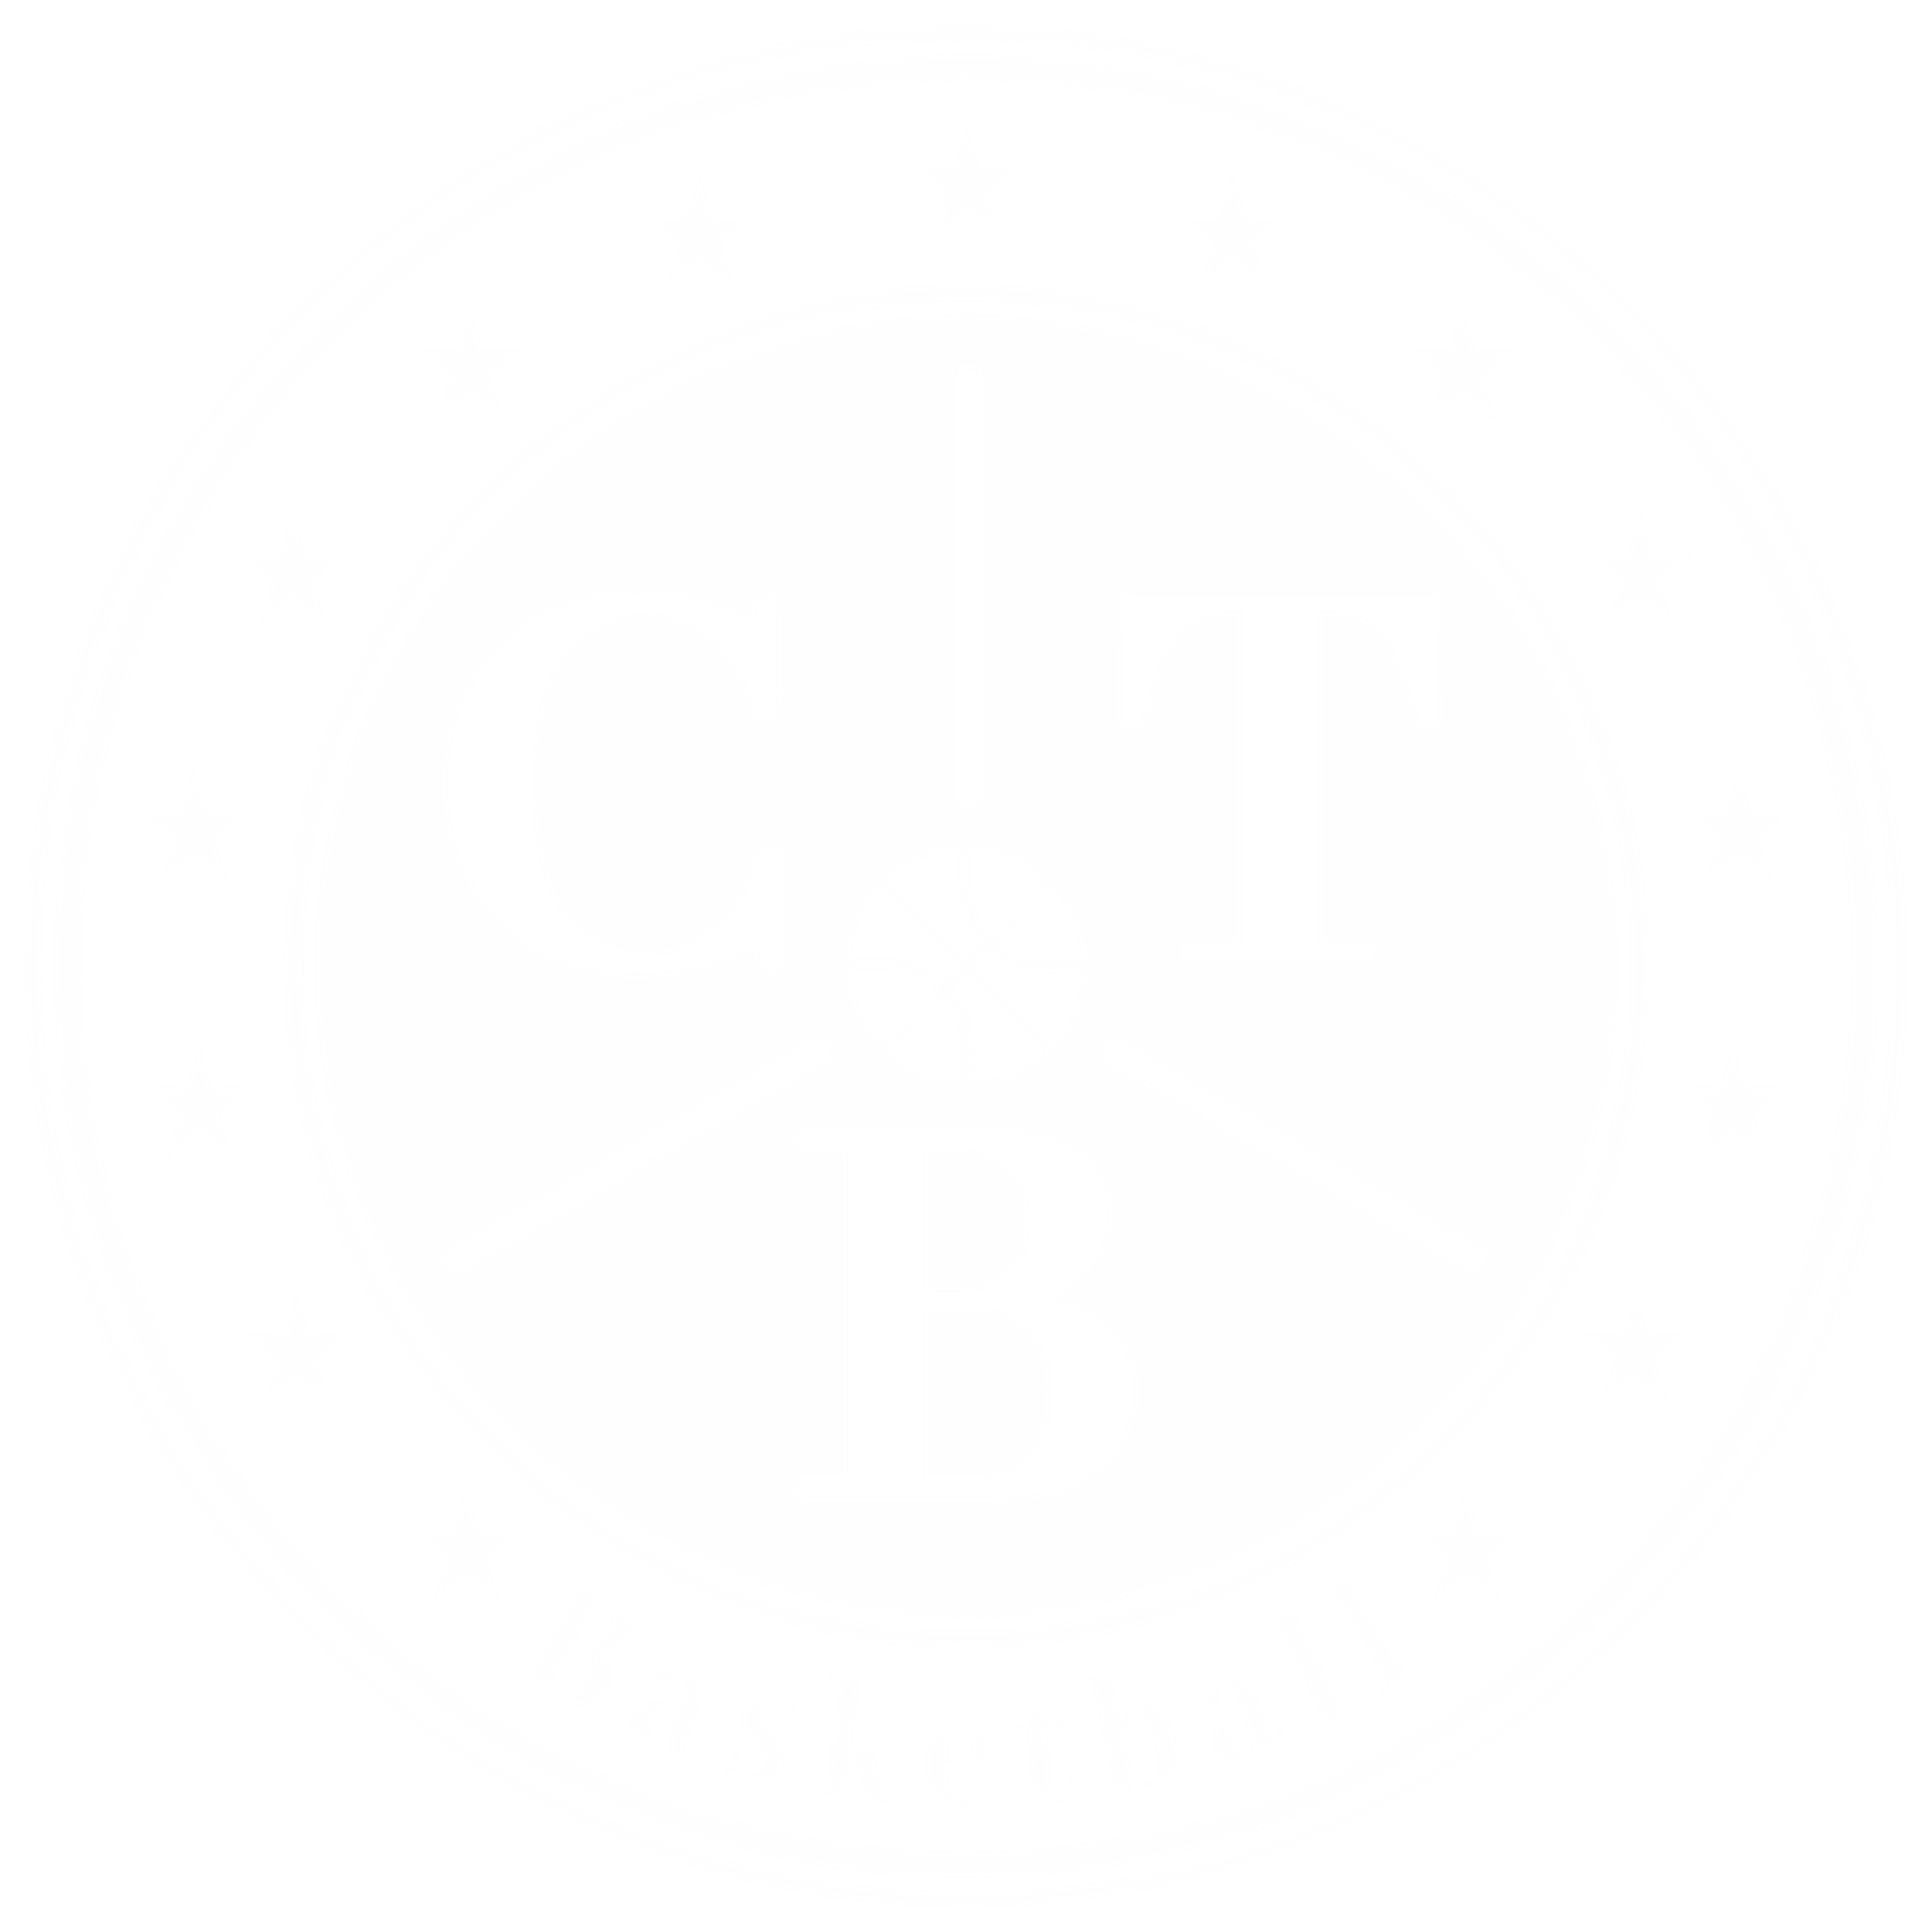 The CTB logo